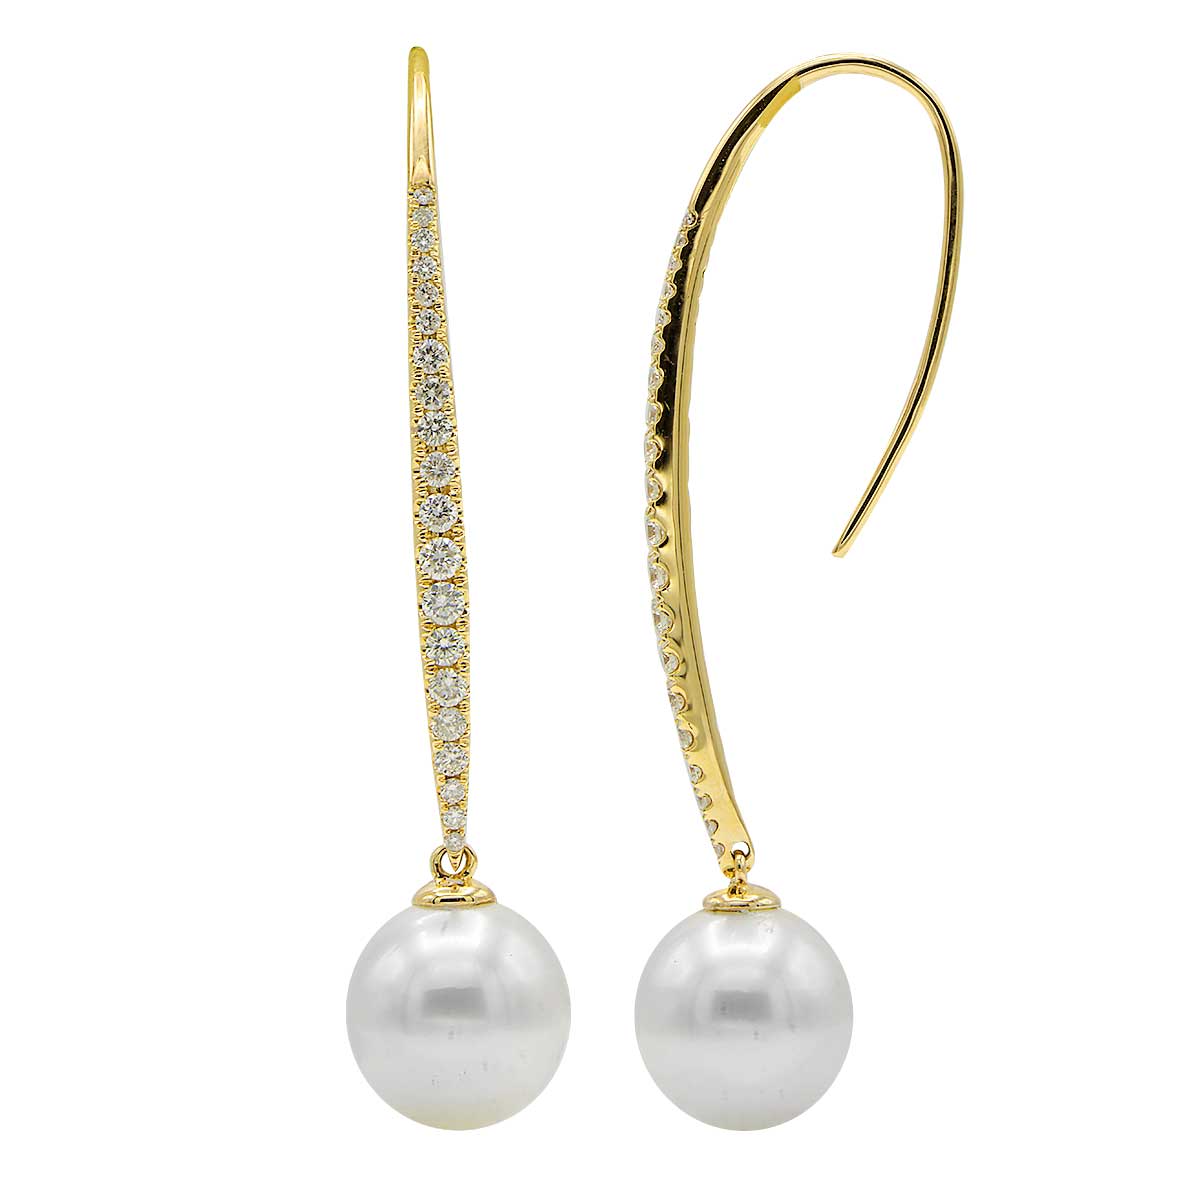 18KY White South Sea Pearl Earrings, 10-11mm